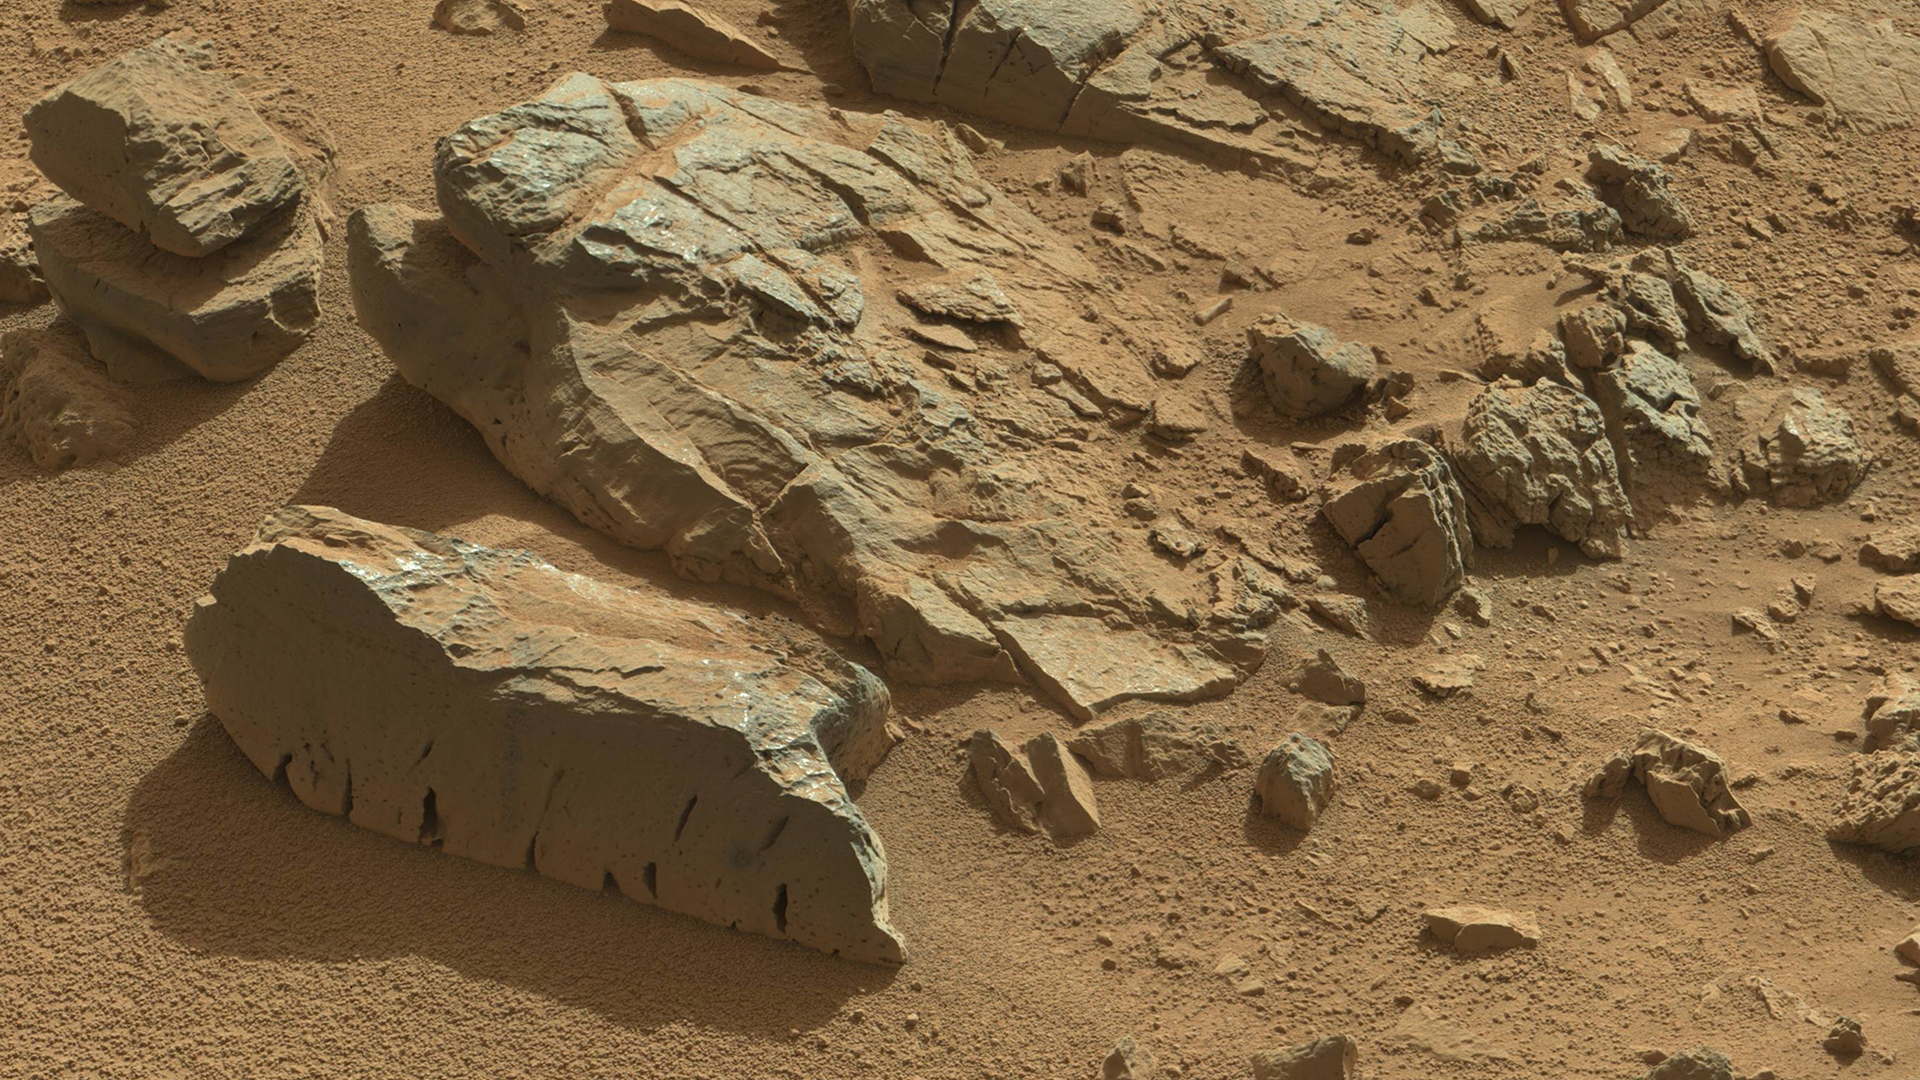 Msl Curiosity Sol Mars Wallpaper HD Picture